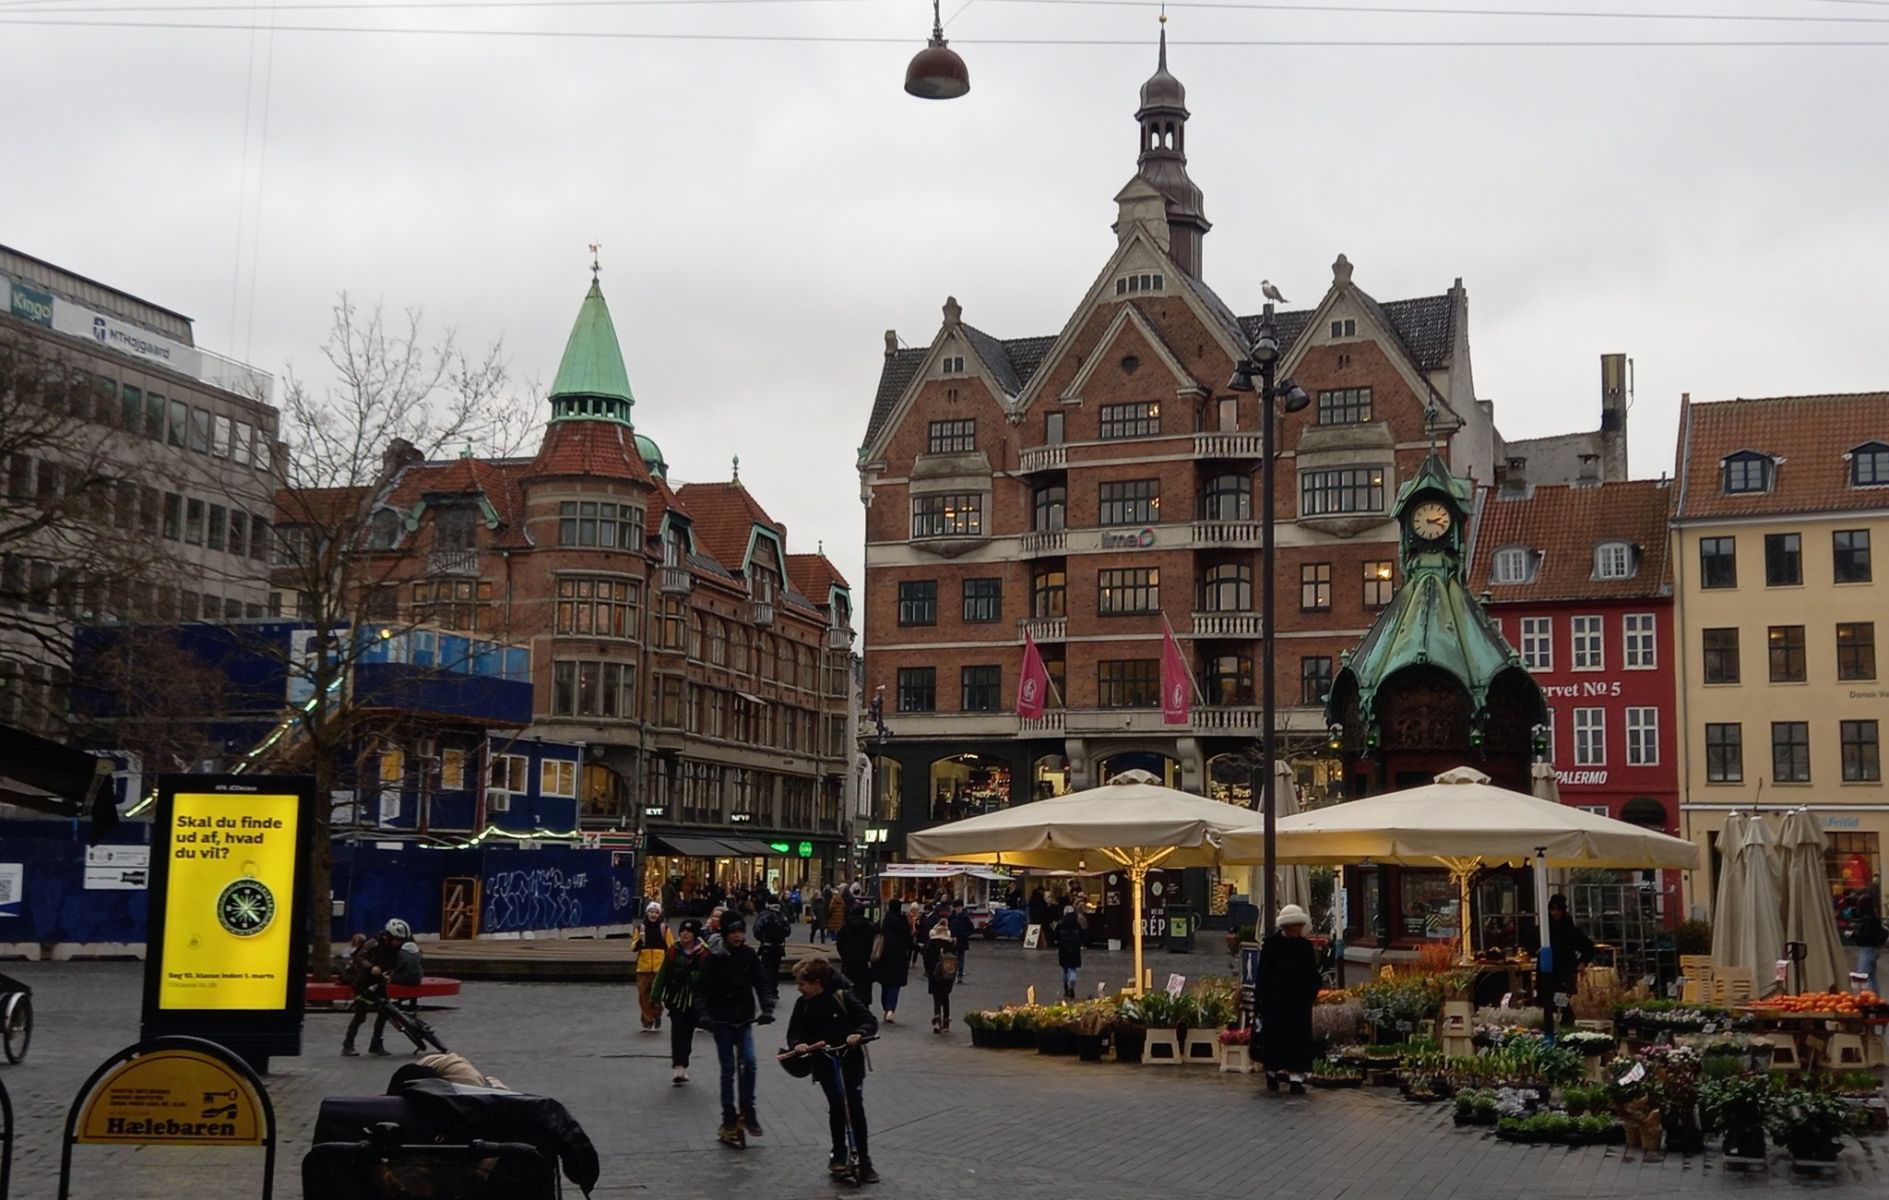 Copenhagen - capital city of Denmark